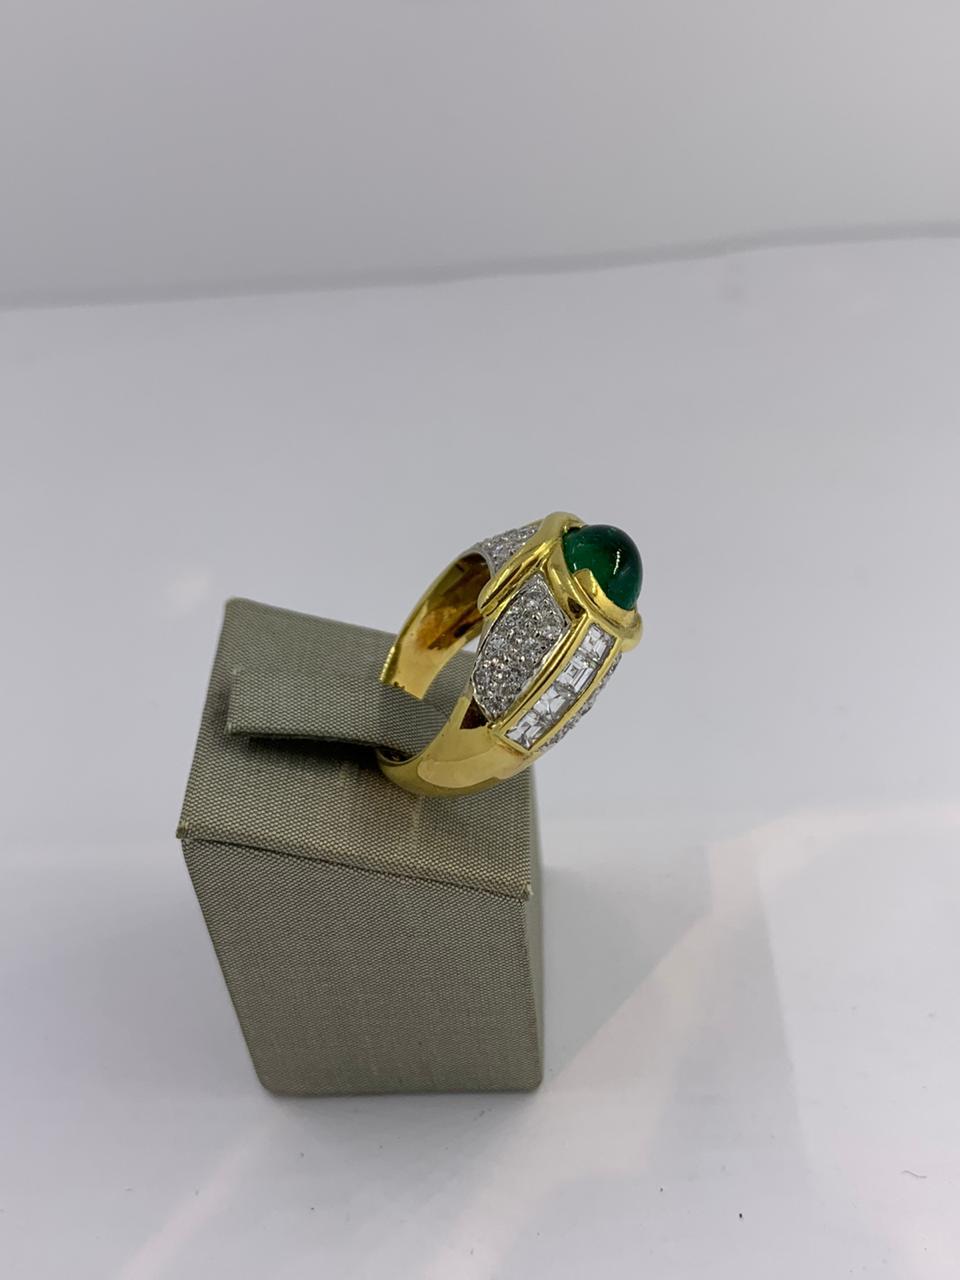 Emerald and Diamond Ring
set in 18kt Yellow Gold
Emerald 2.20 ct
Diamonds 0.75 ct
21-11436